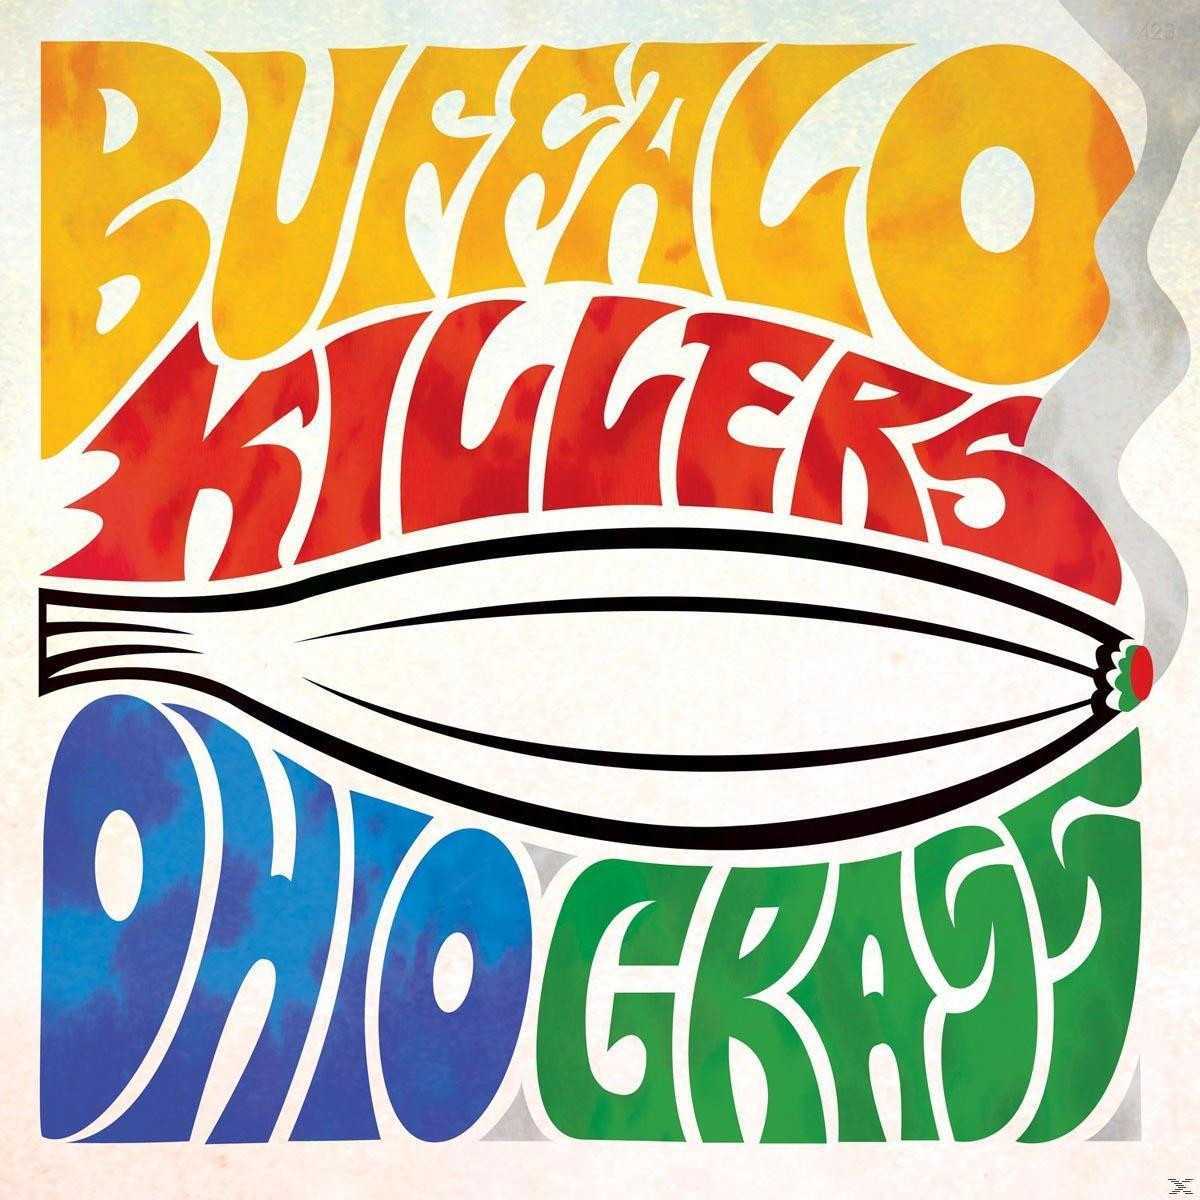 (CD) Grass - Ohio - Buffalo Killers